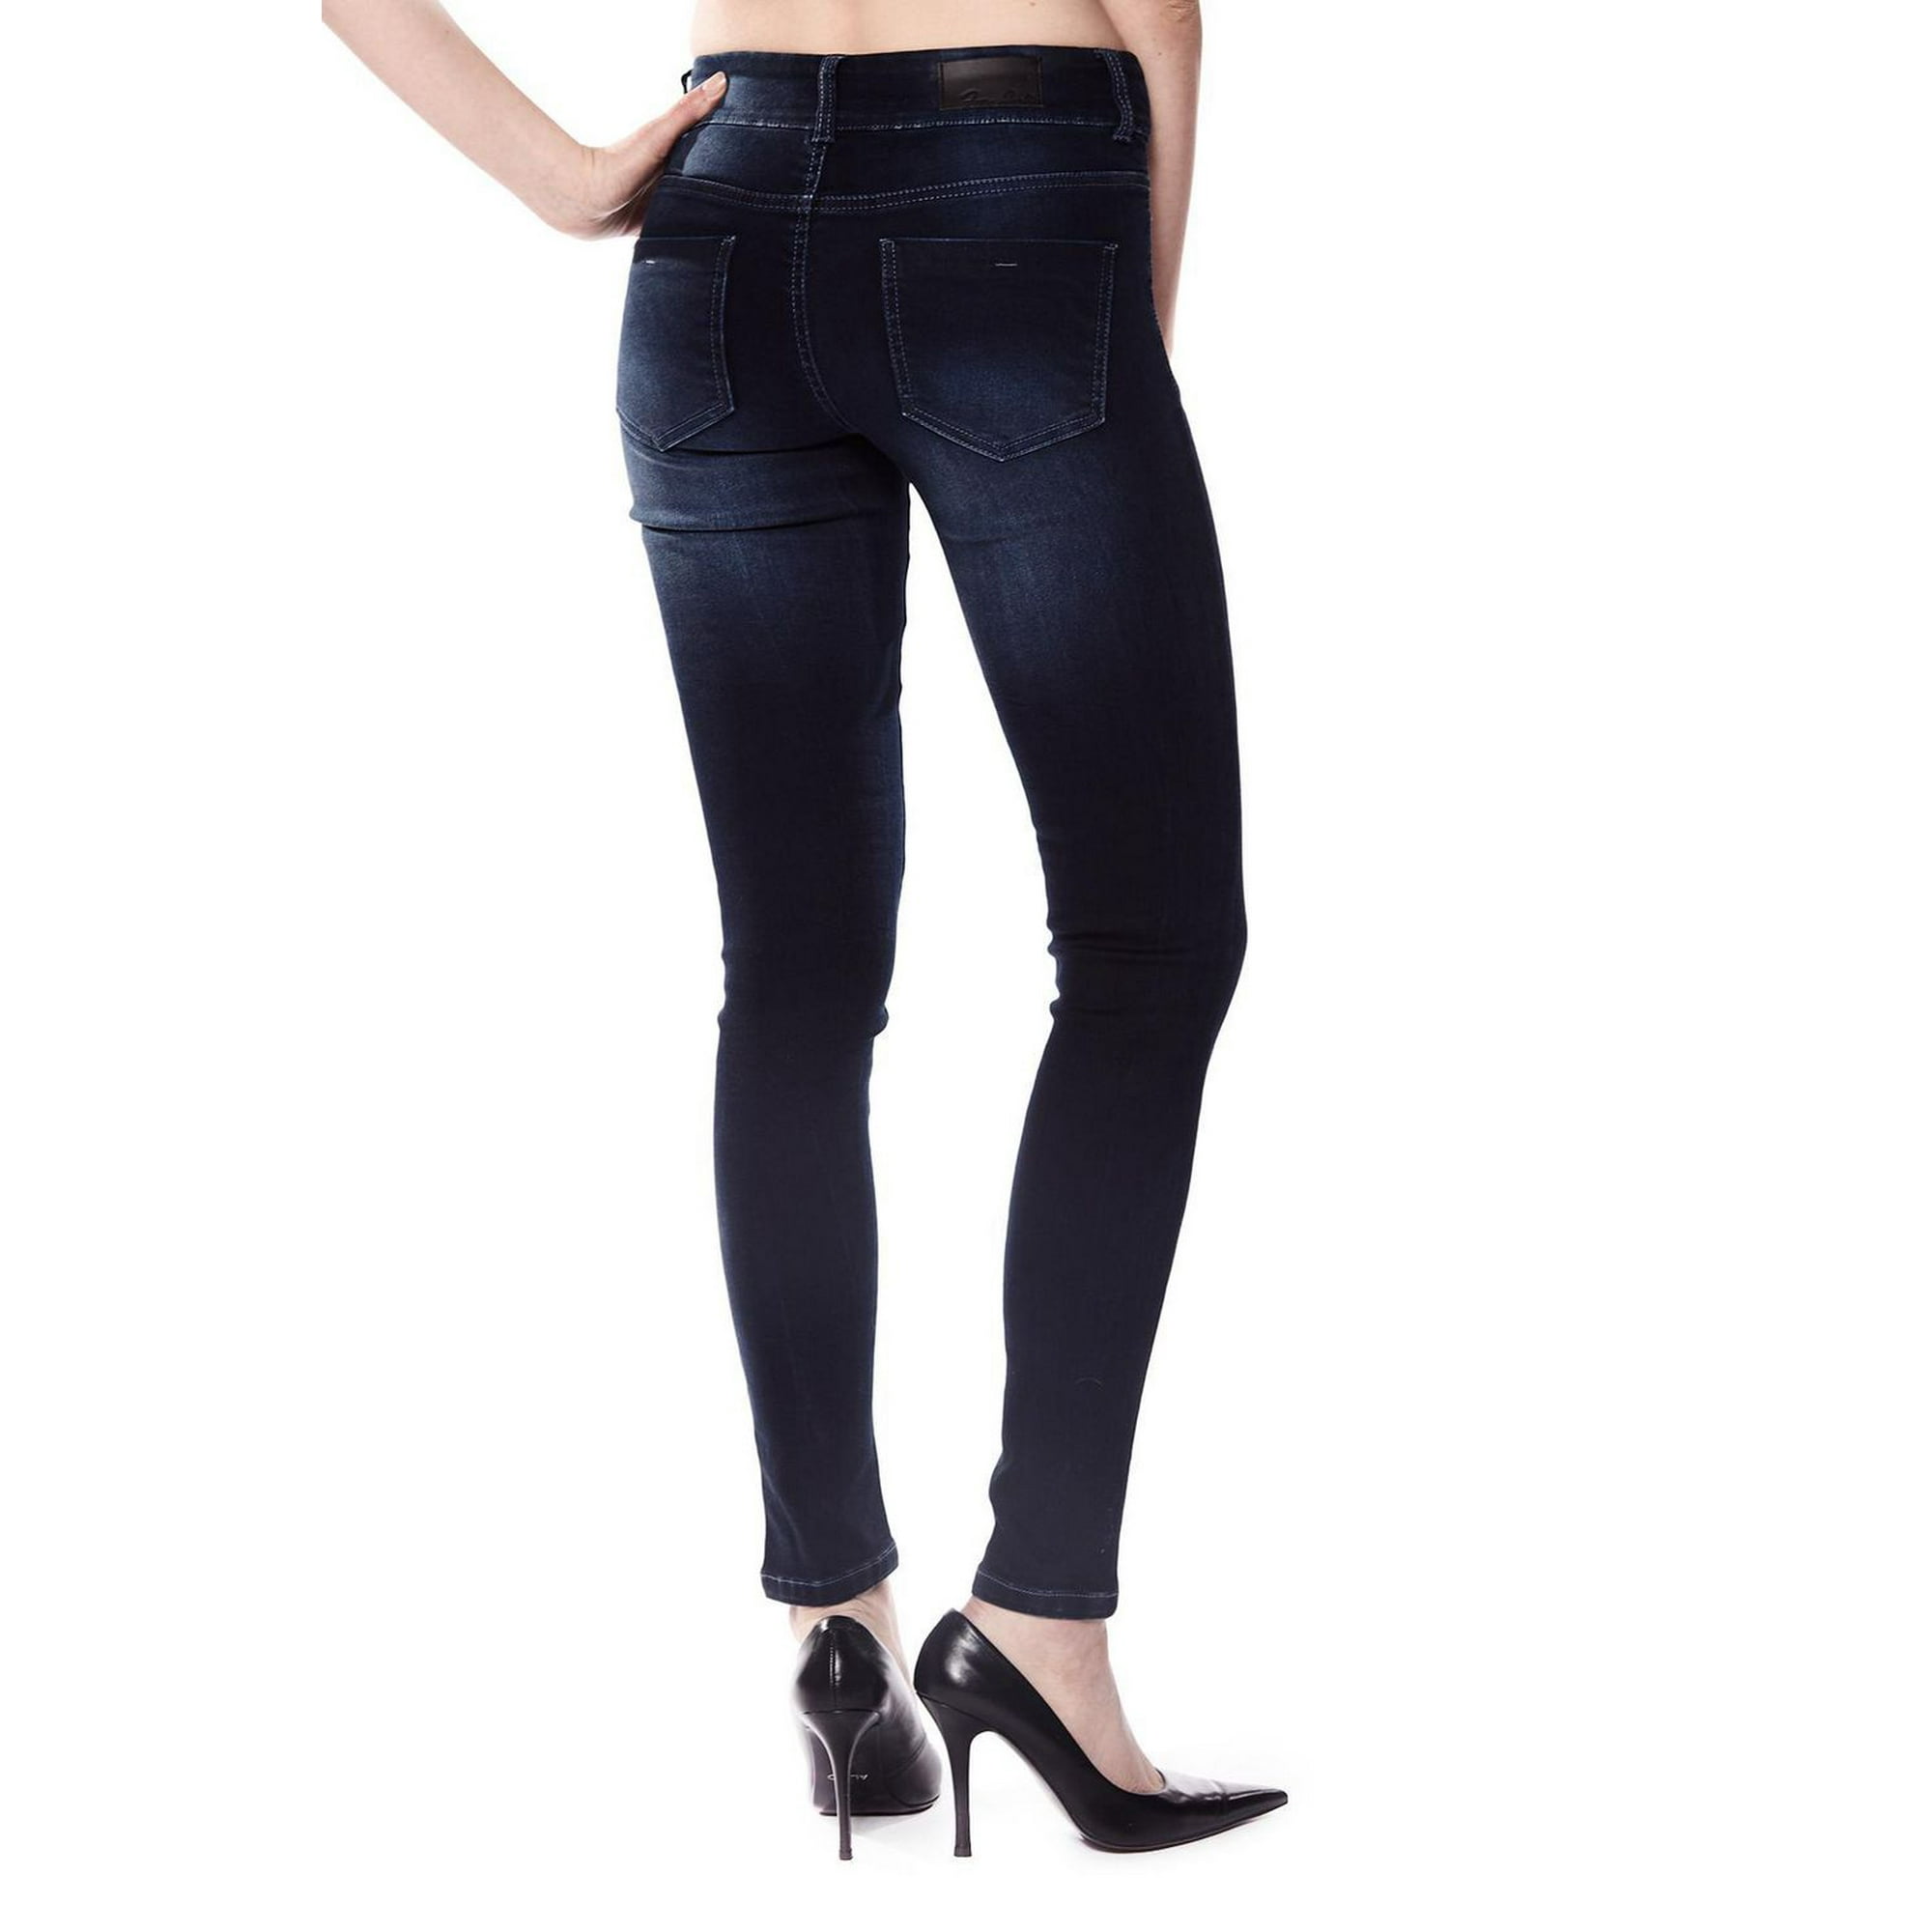 YMI Jeans Womens 9 Blue Denim Skinny Jegging Low Rise Dark Wash 28x30